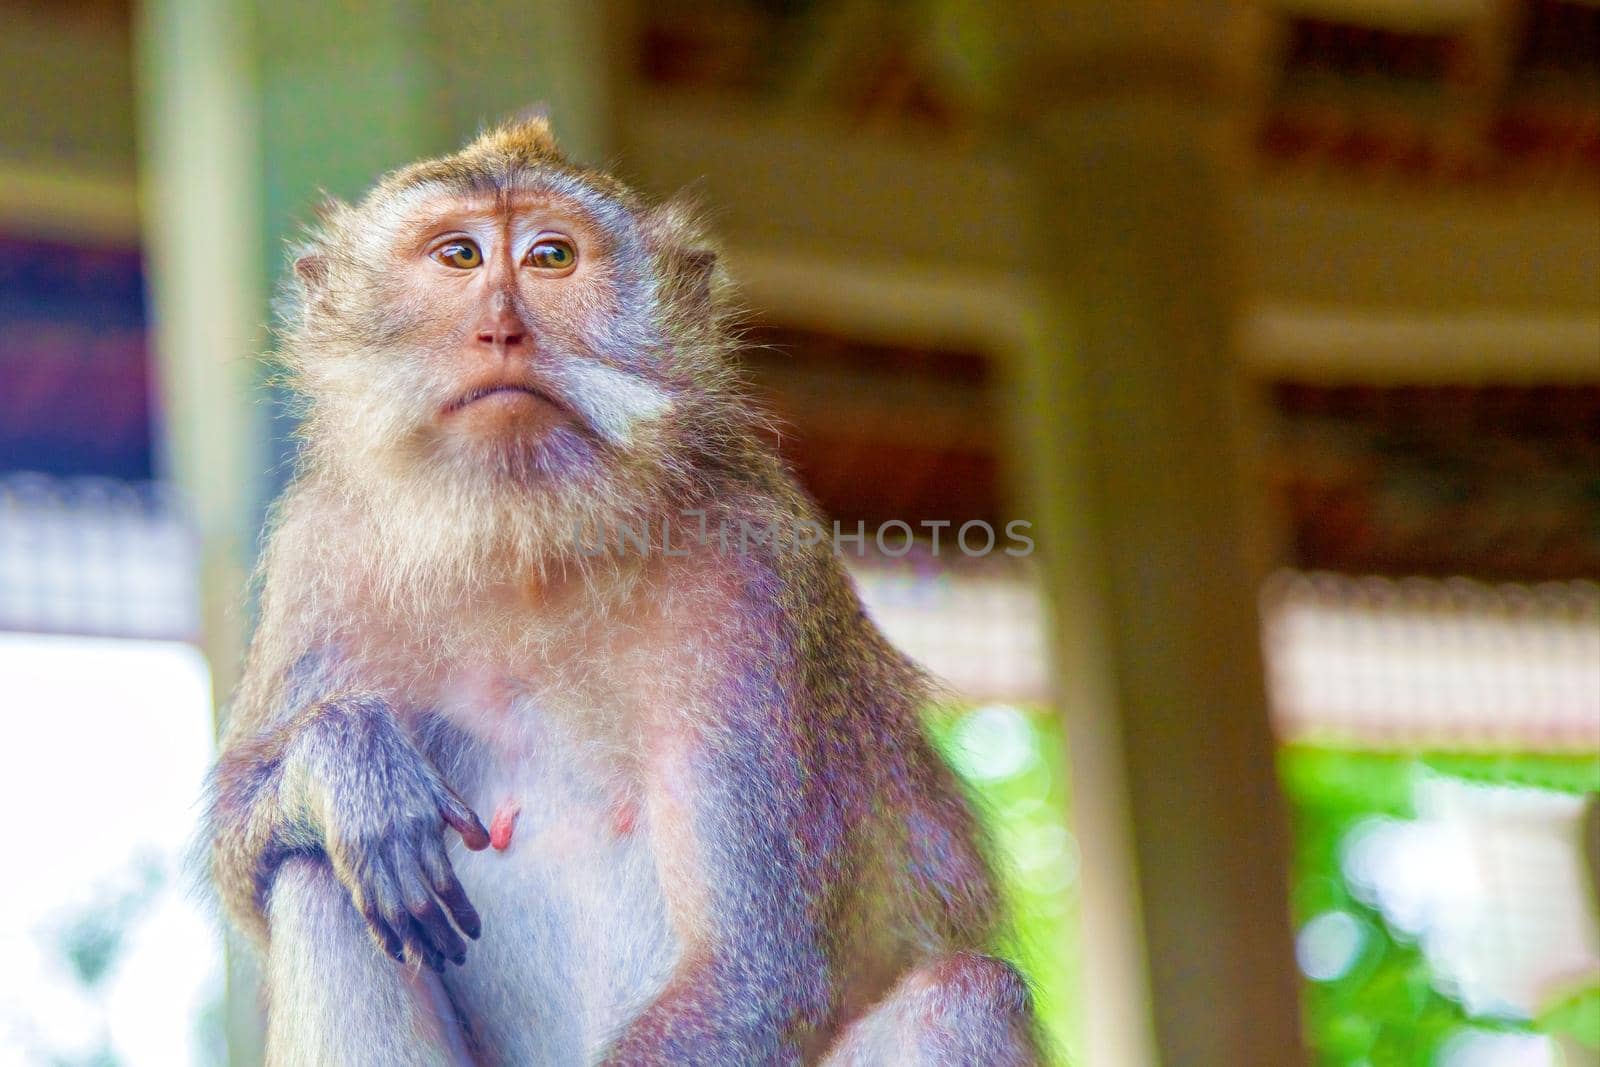 Sad monkey thinking looking to the side. Wildlife concept, Kenya national park.